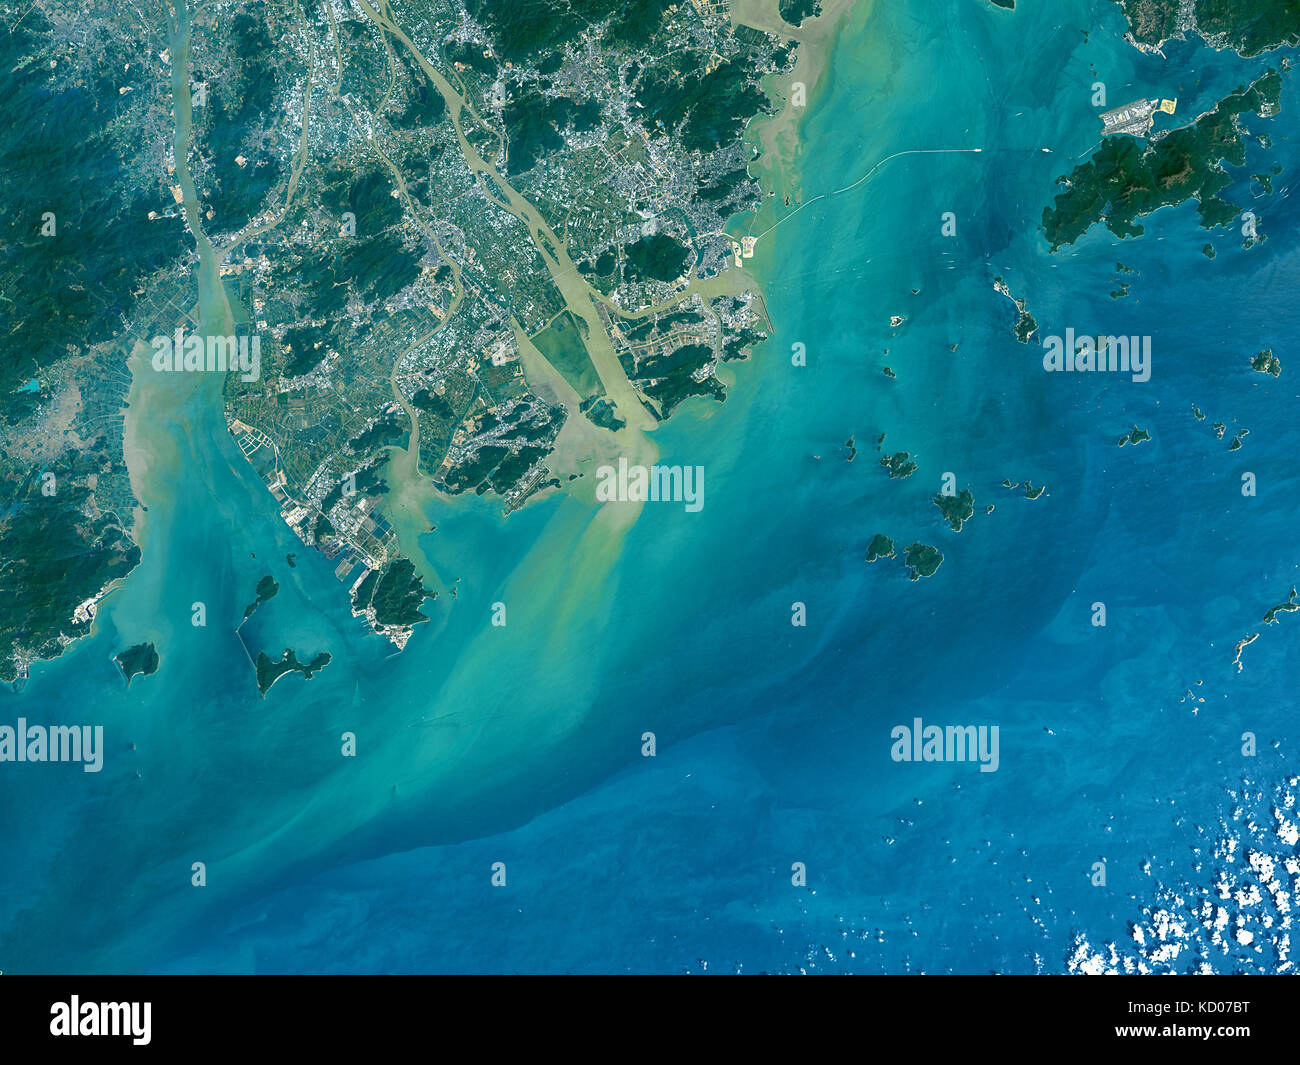 Immagine satellitare di Honk Kong e il Pearl River Delta, Hong Kong Foto Stock